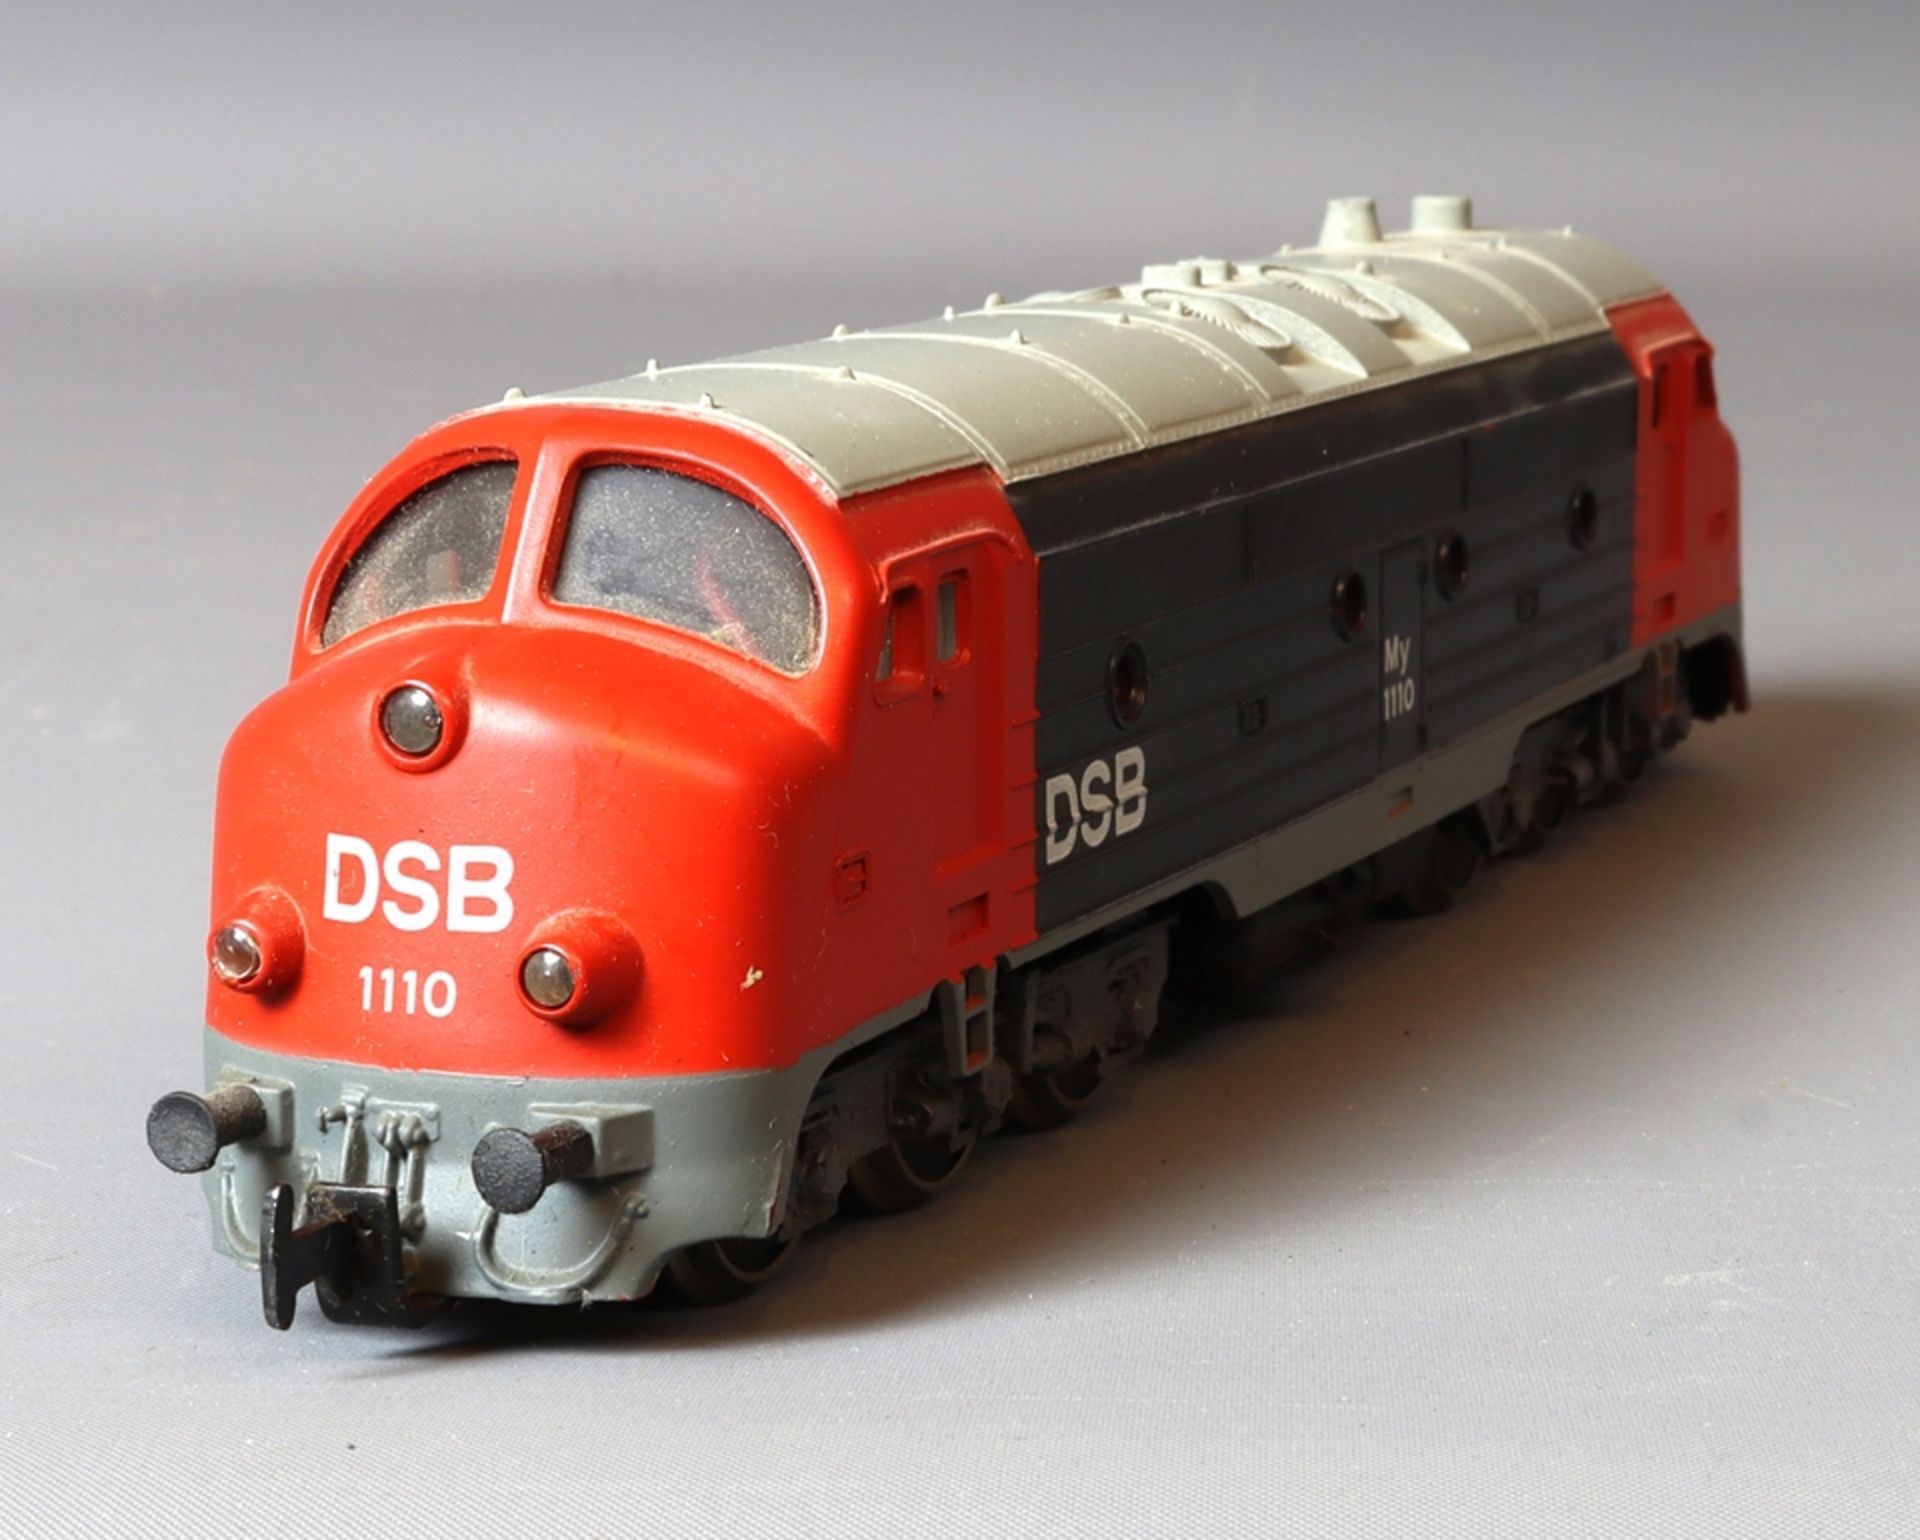 NMY electric locomotive DSB My 1110, 21st century, German - Image 2 of 3